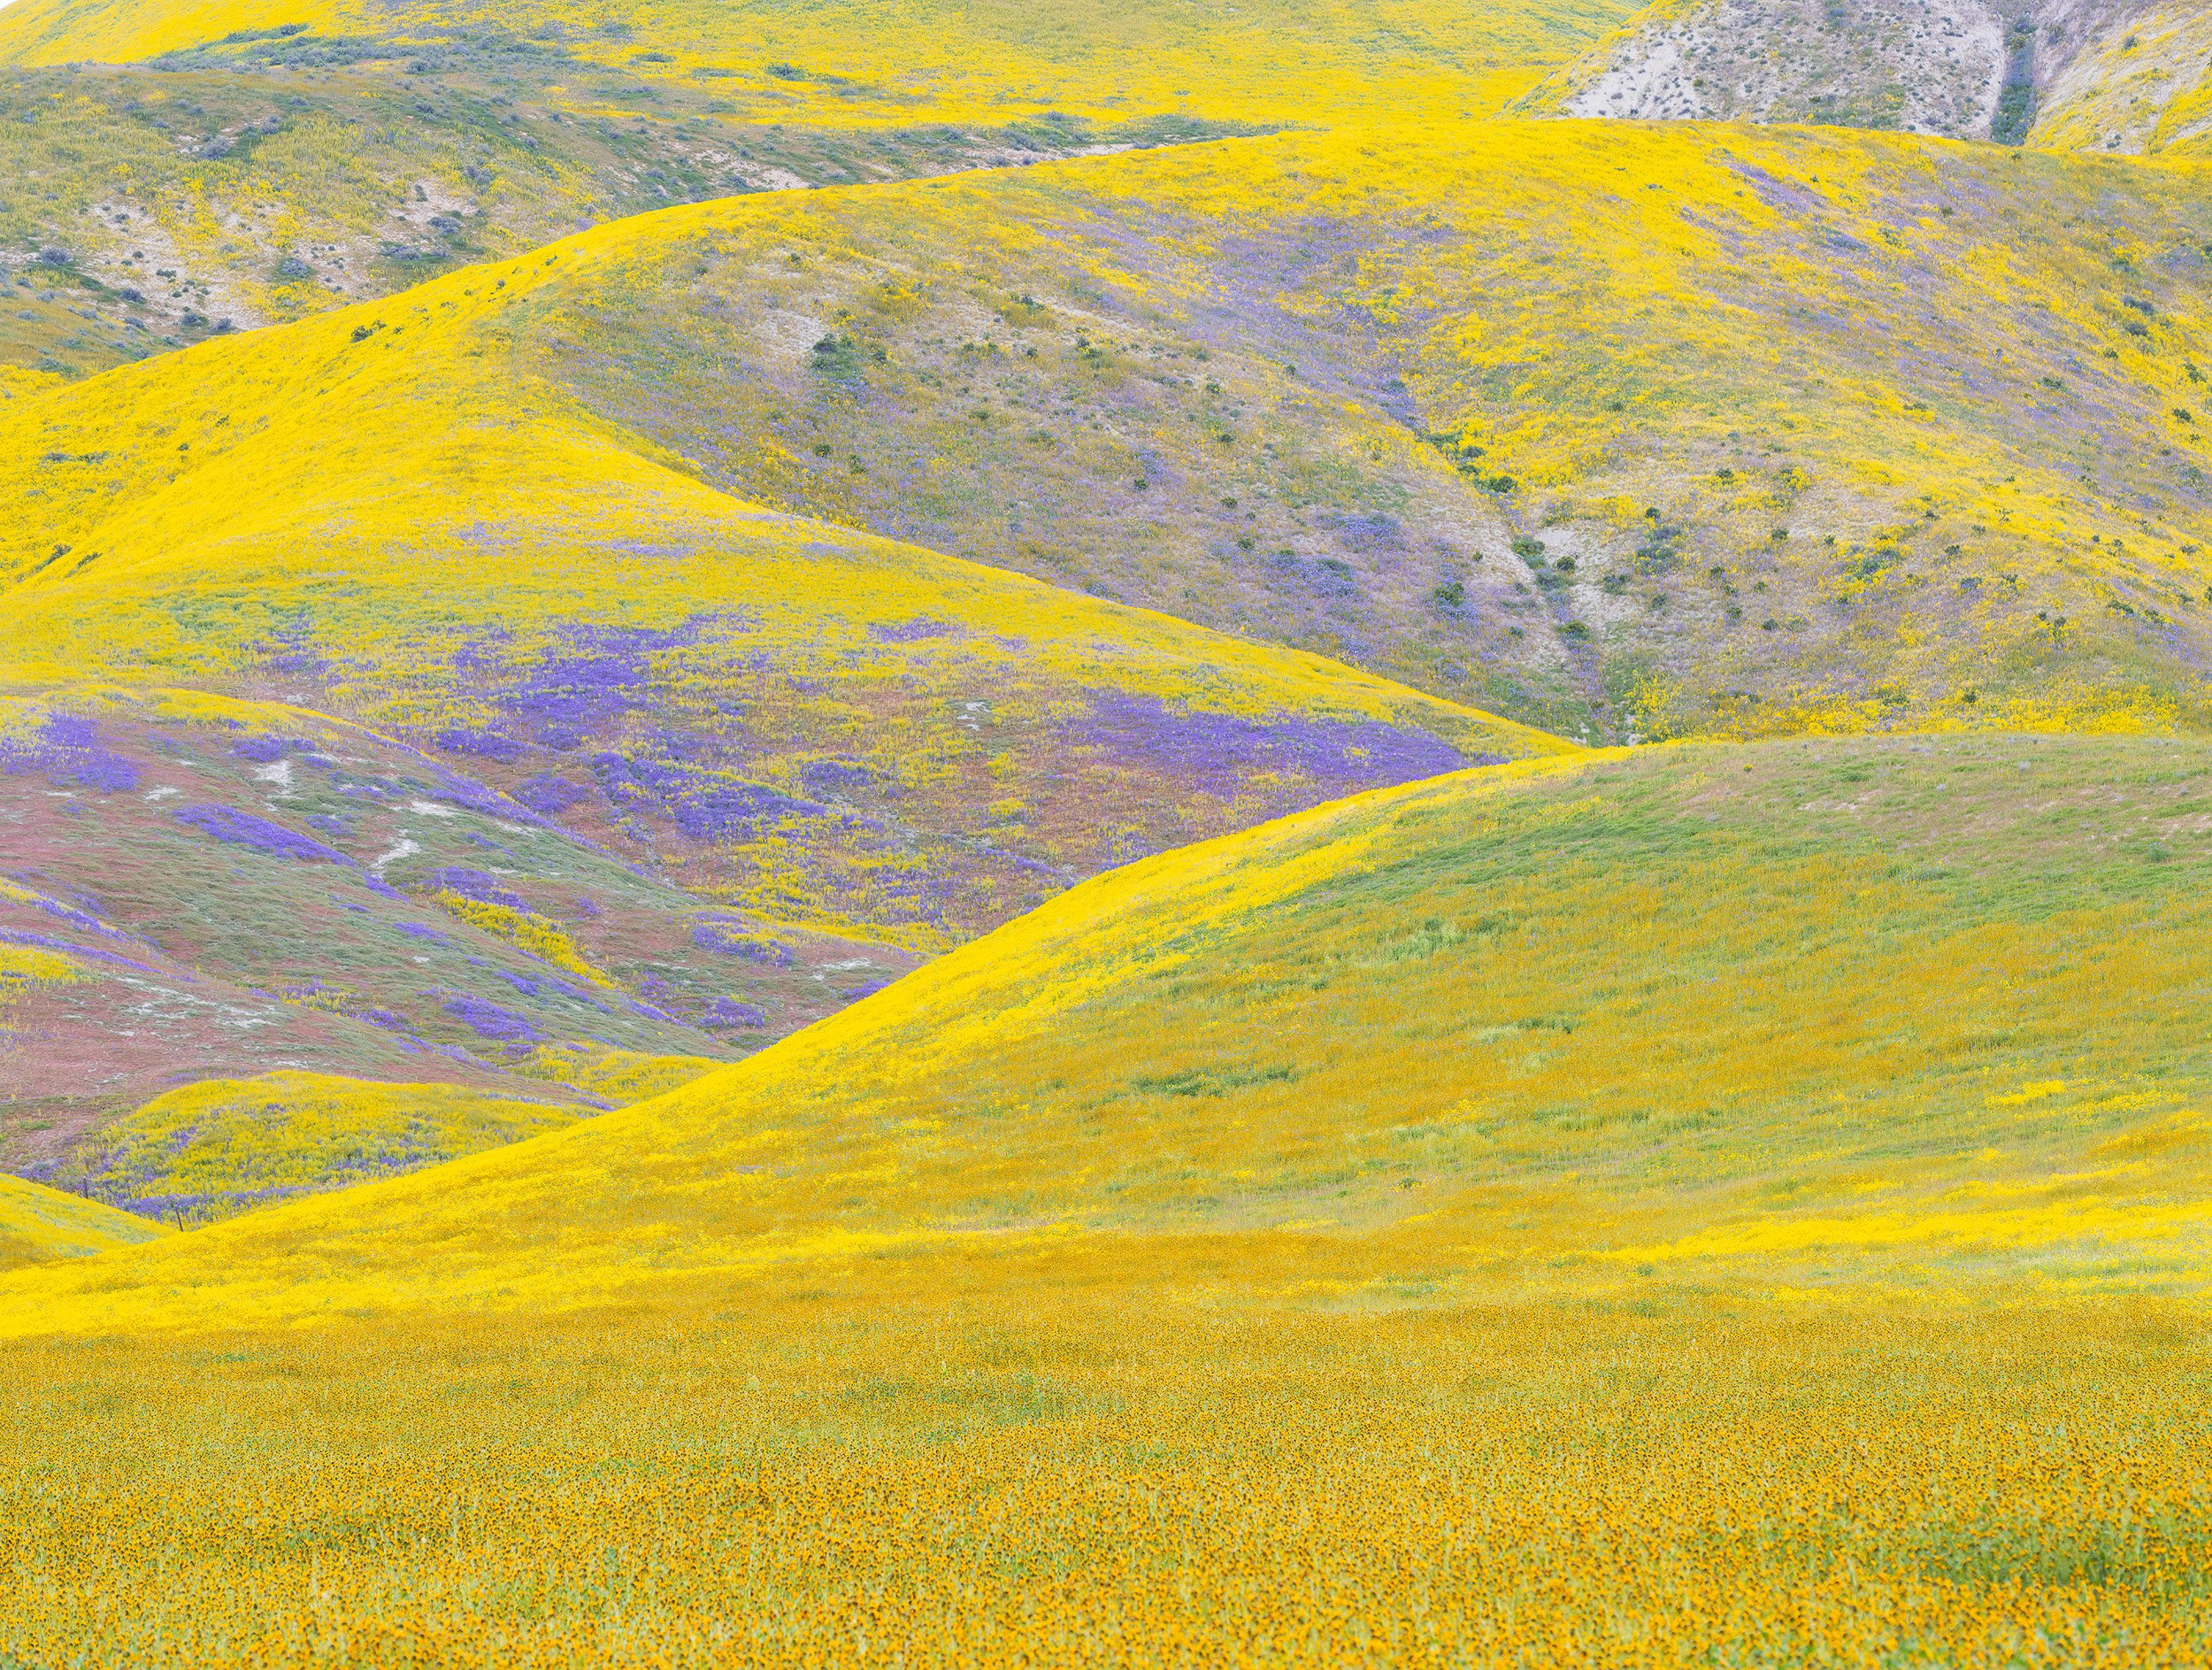 Wildflowers. Carrizo Plain, California